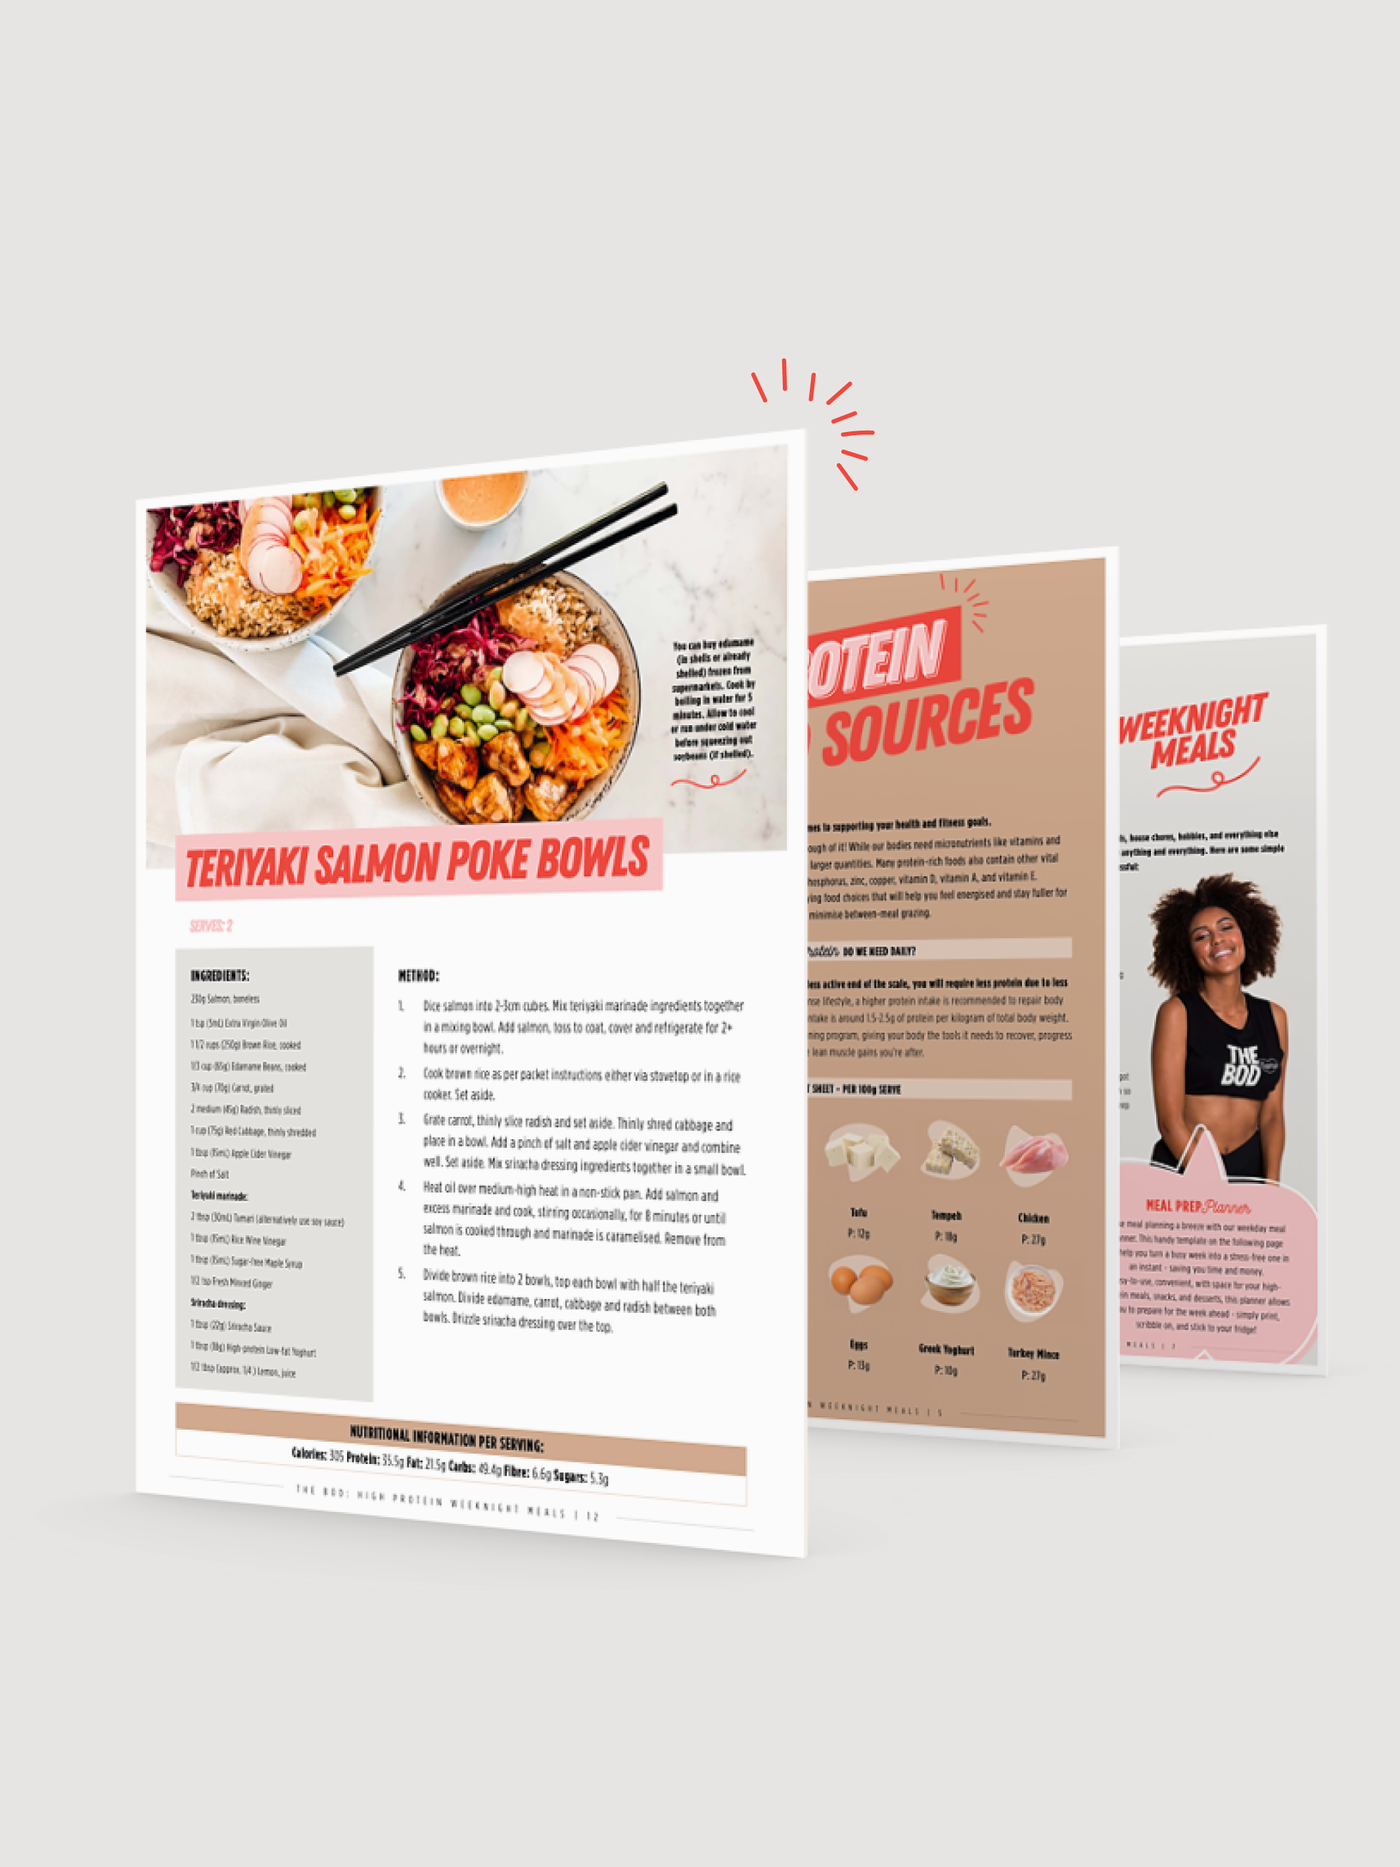 High Protein Weeknight Meals Recipe Book | Digital Edition